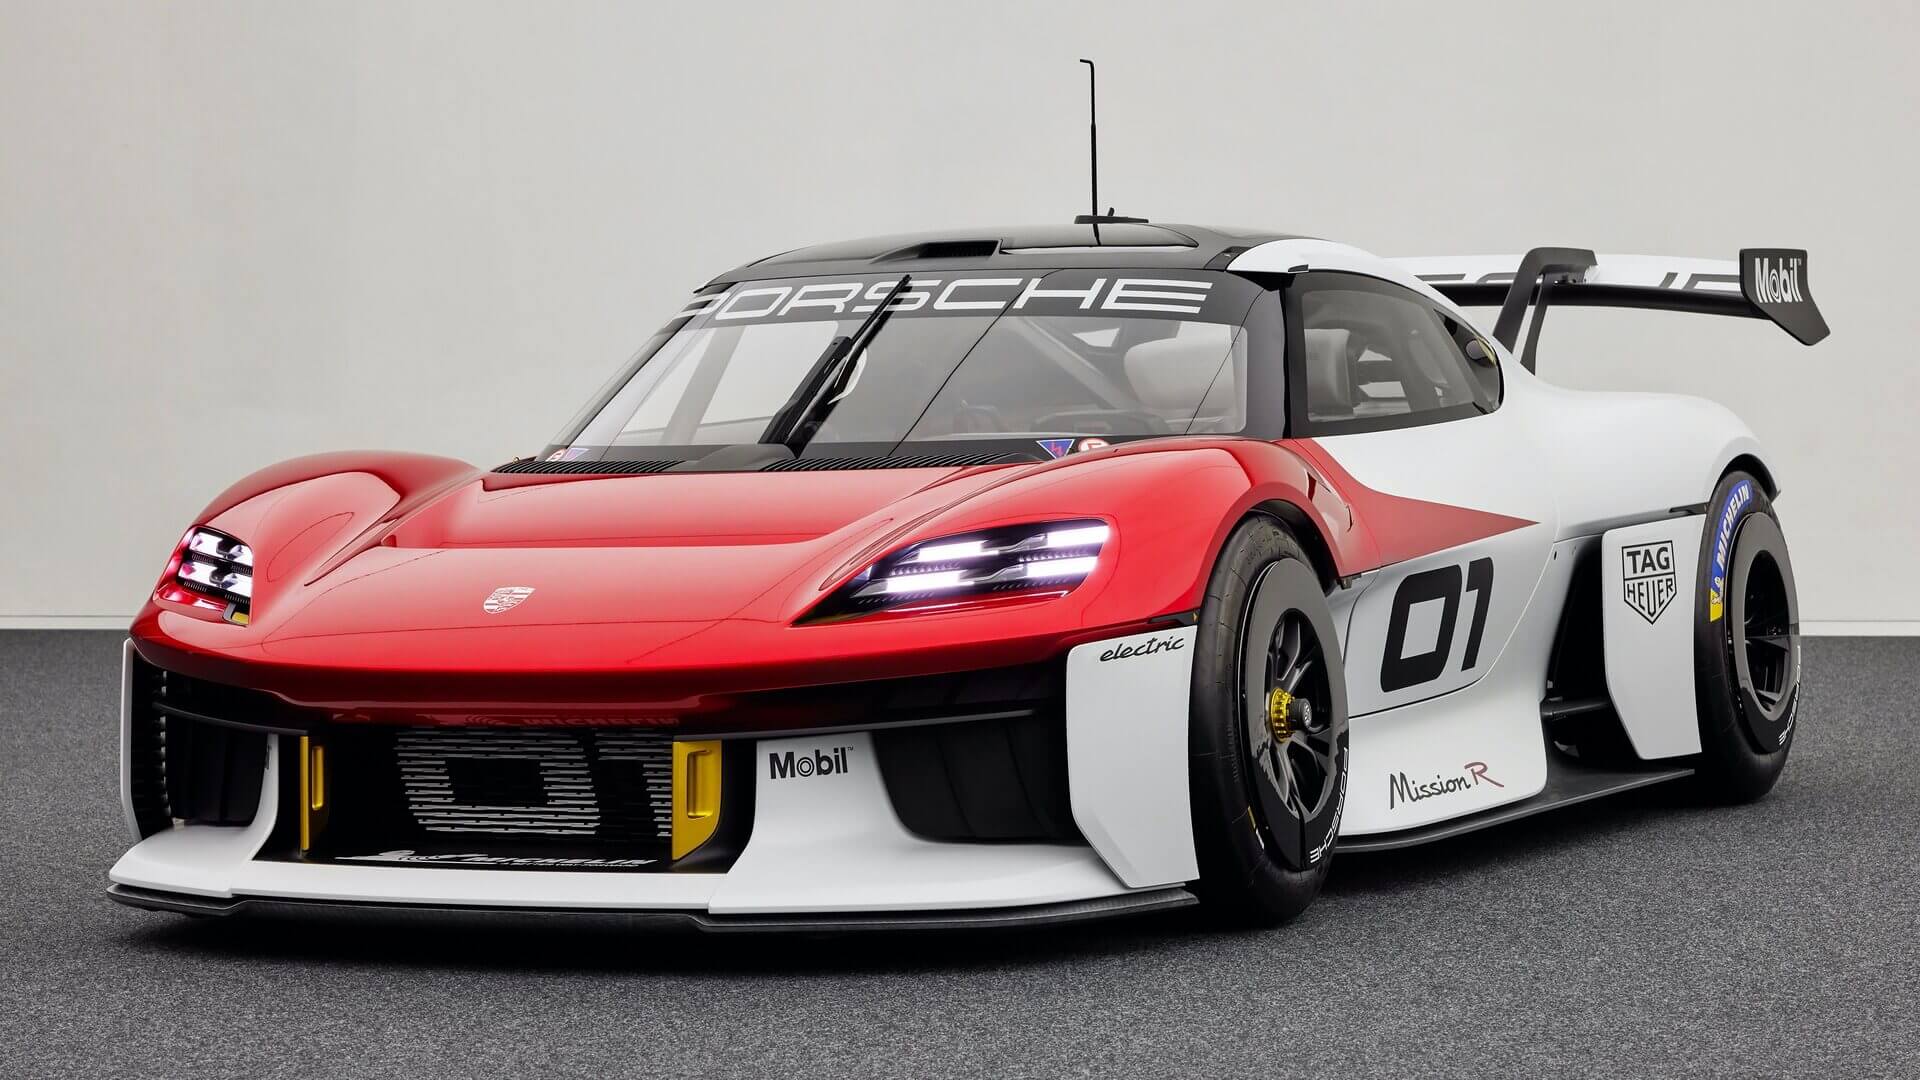 Porsche Mission R — чемпион скорости и устойчивости